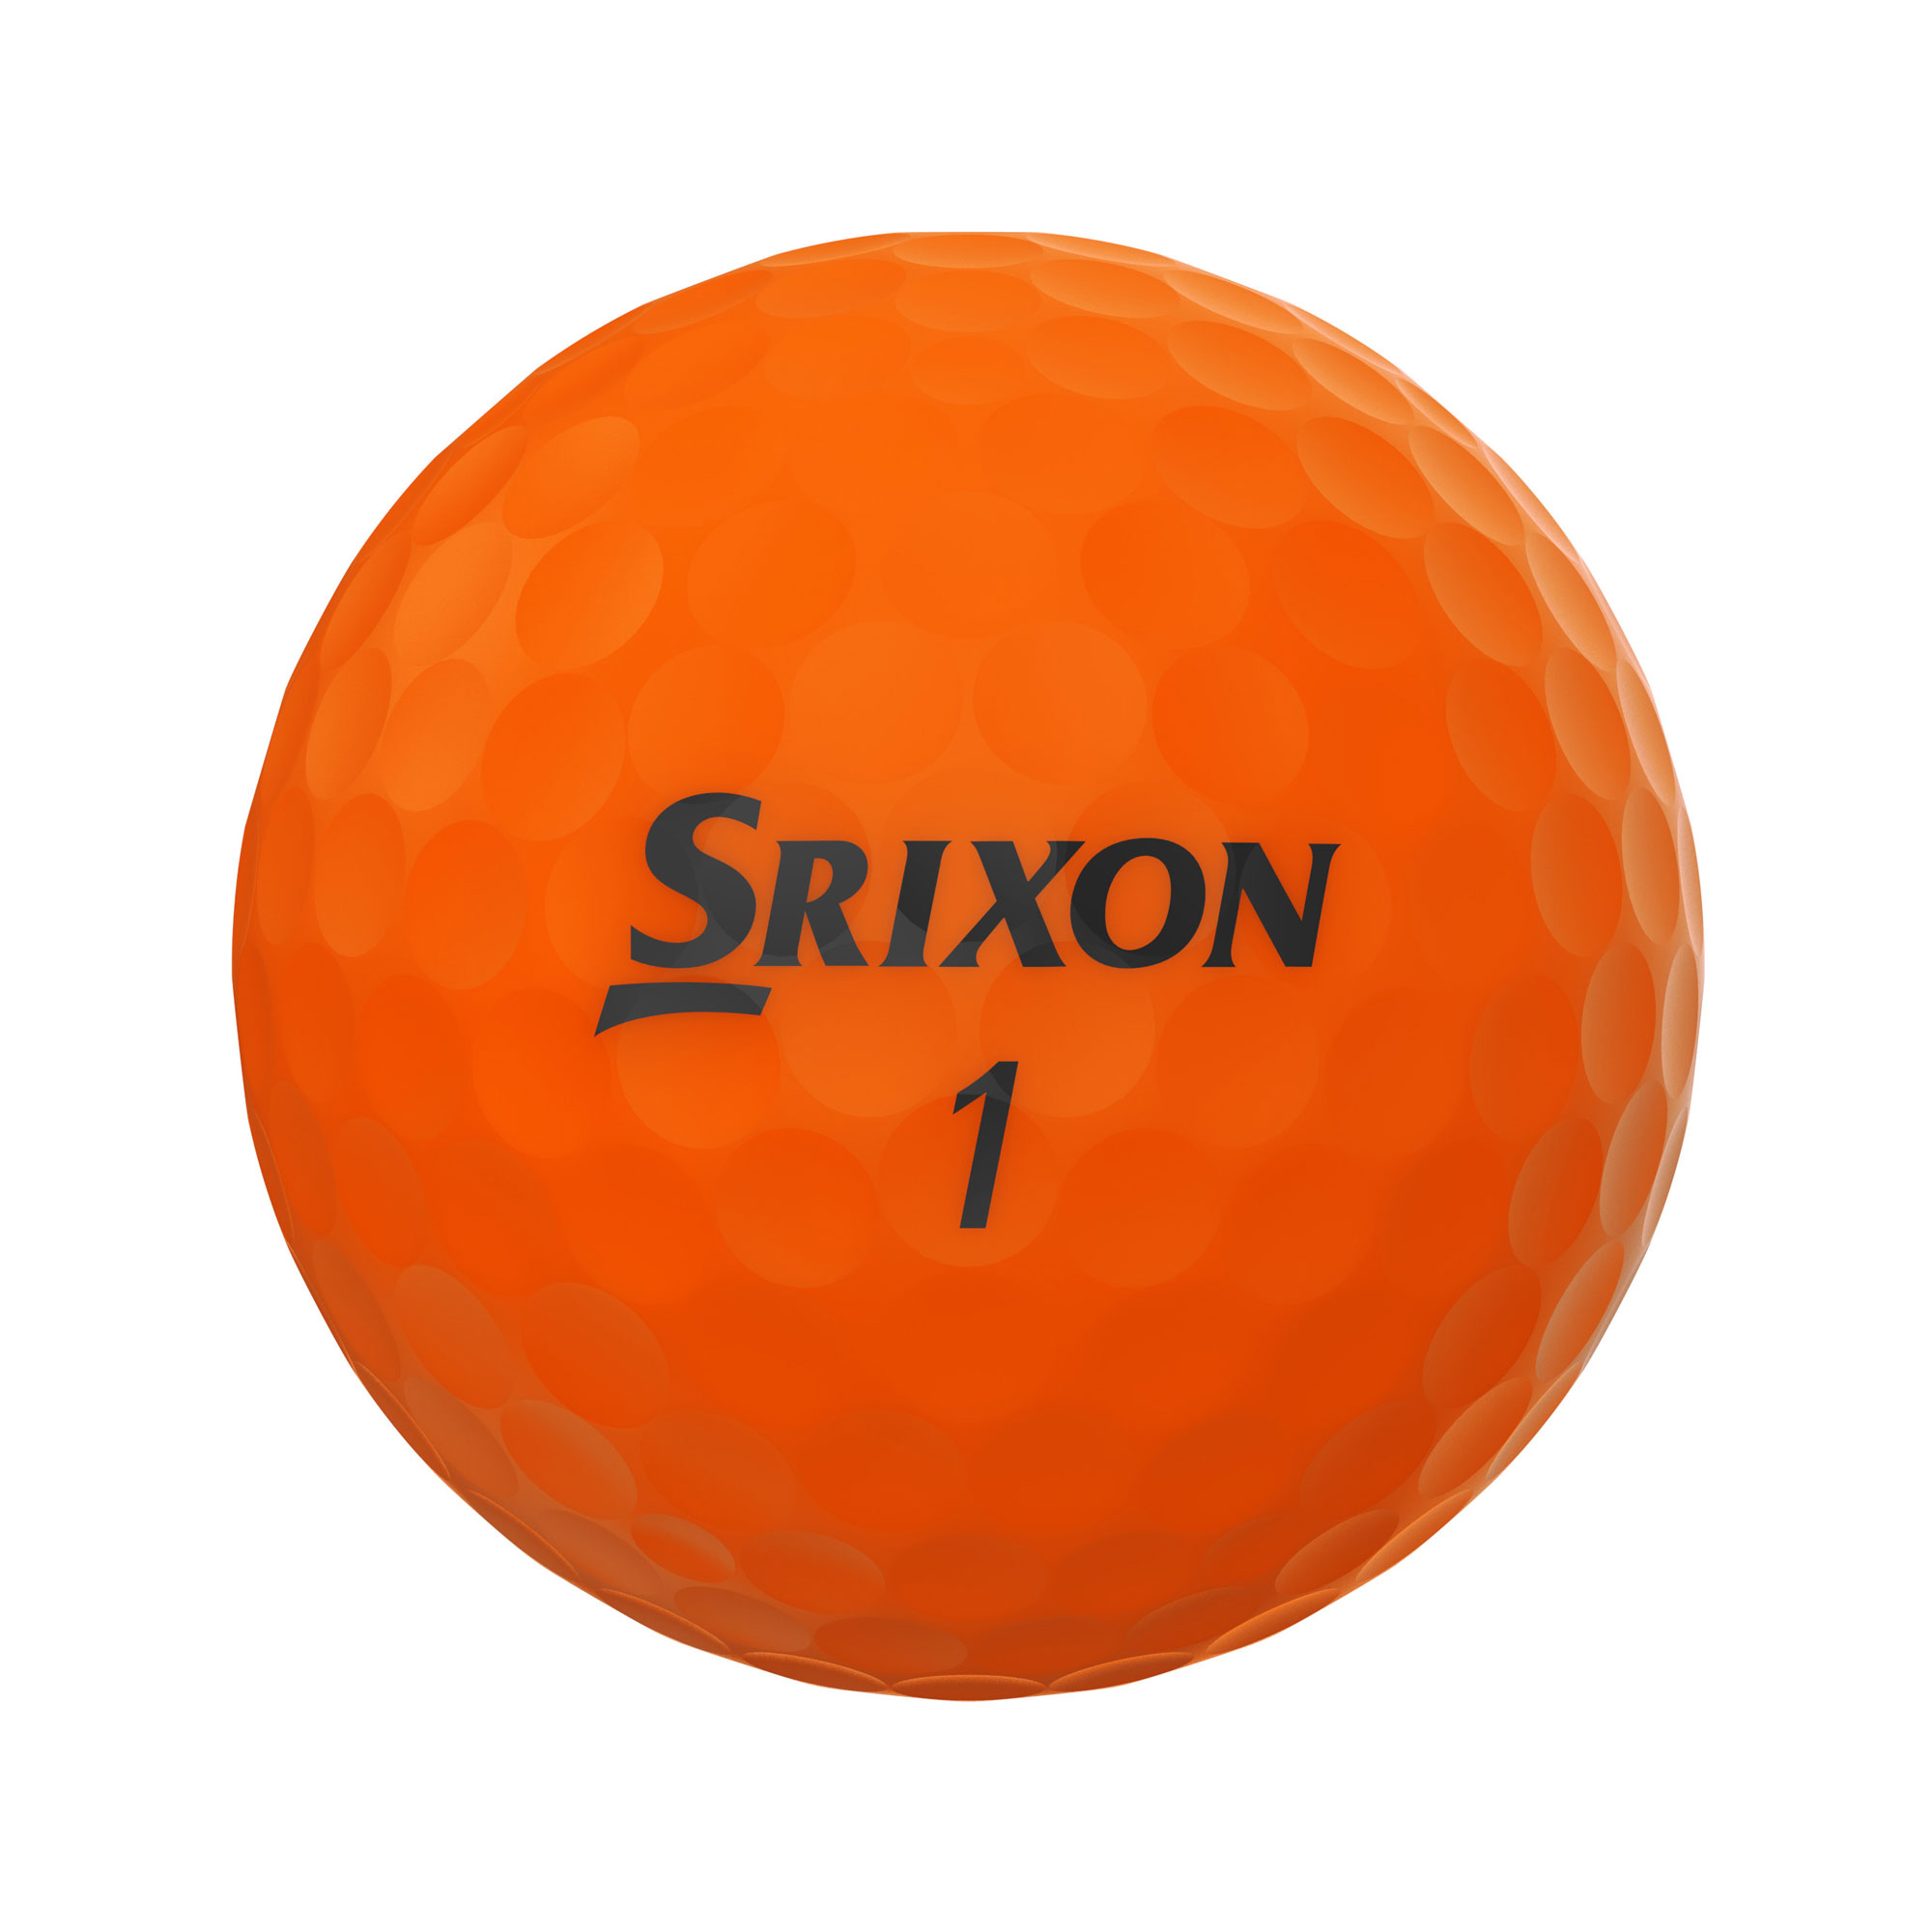 Srixon Soft Feel Golfbälle bedruckt, brite orange (VPE à 12 Bälle)